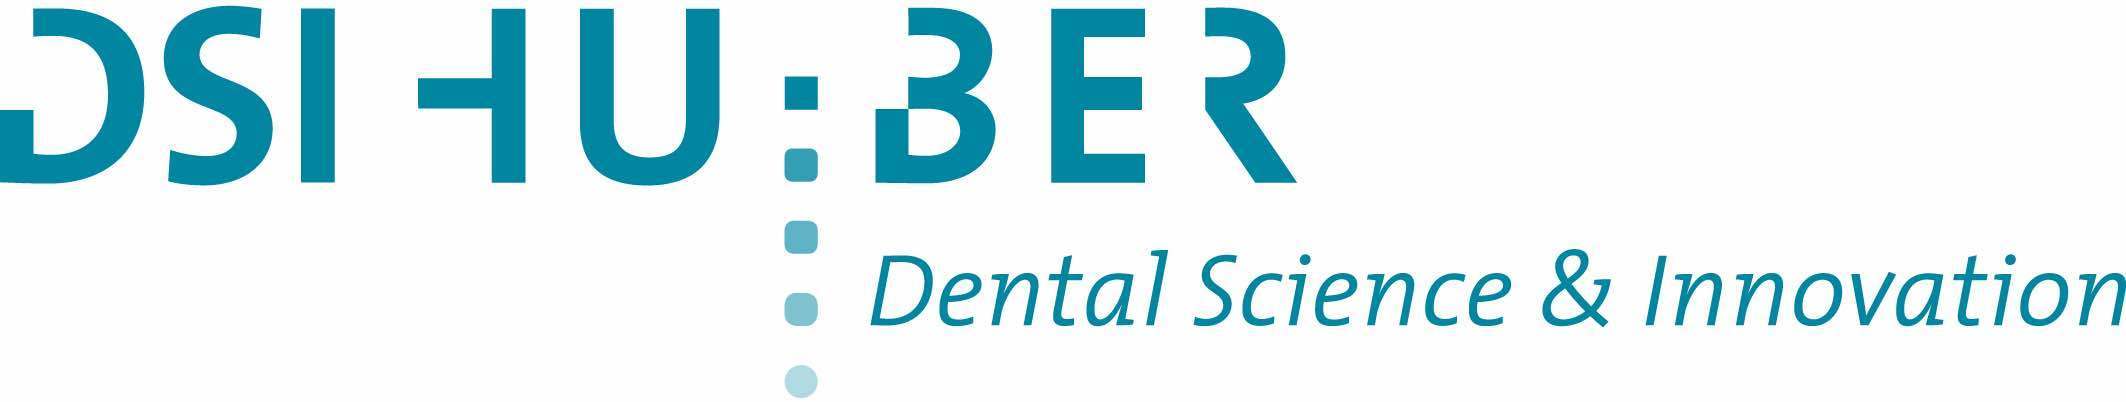 DSI HUBER - Dental Science & Innovation